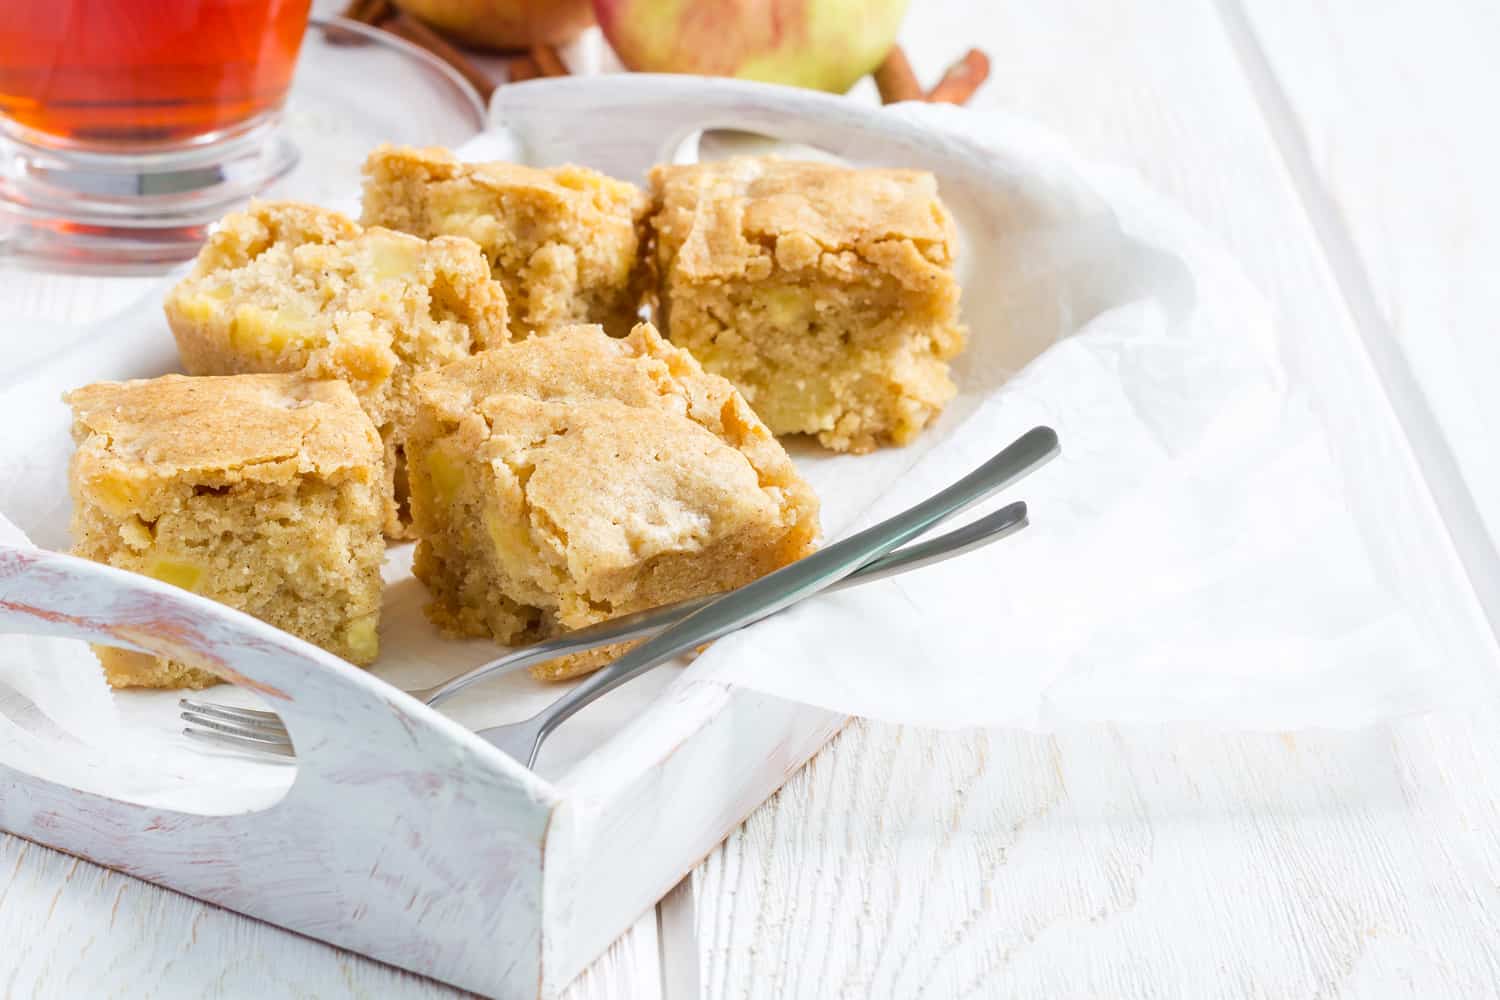 Homemade blondie (blonde) brownies apple cake, square slices in wooden tray, horizonta